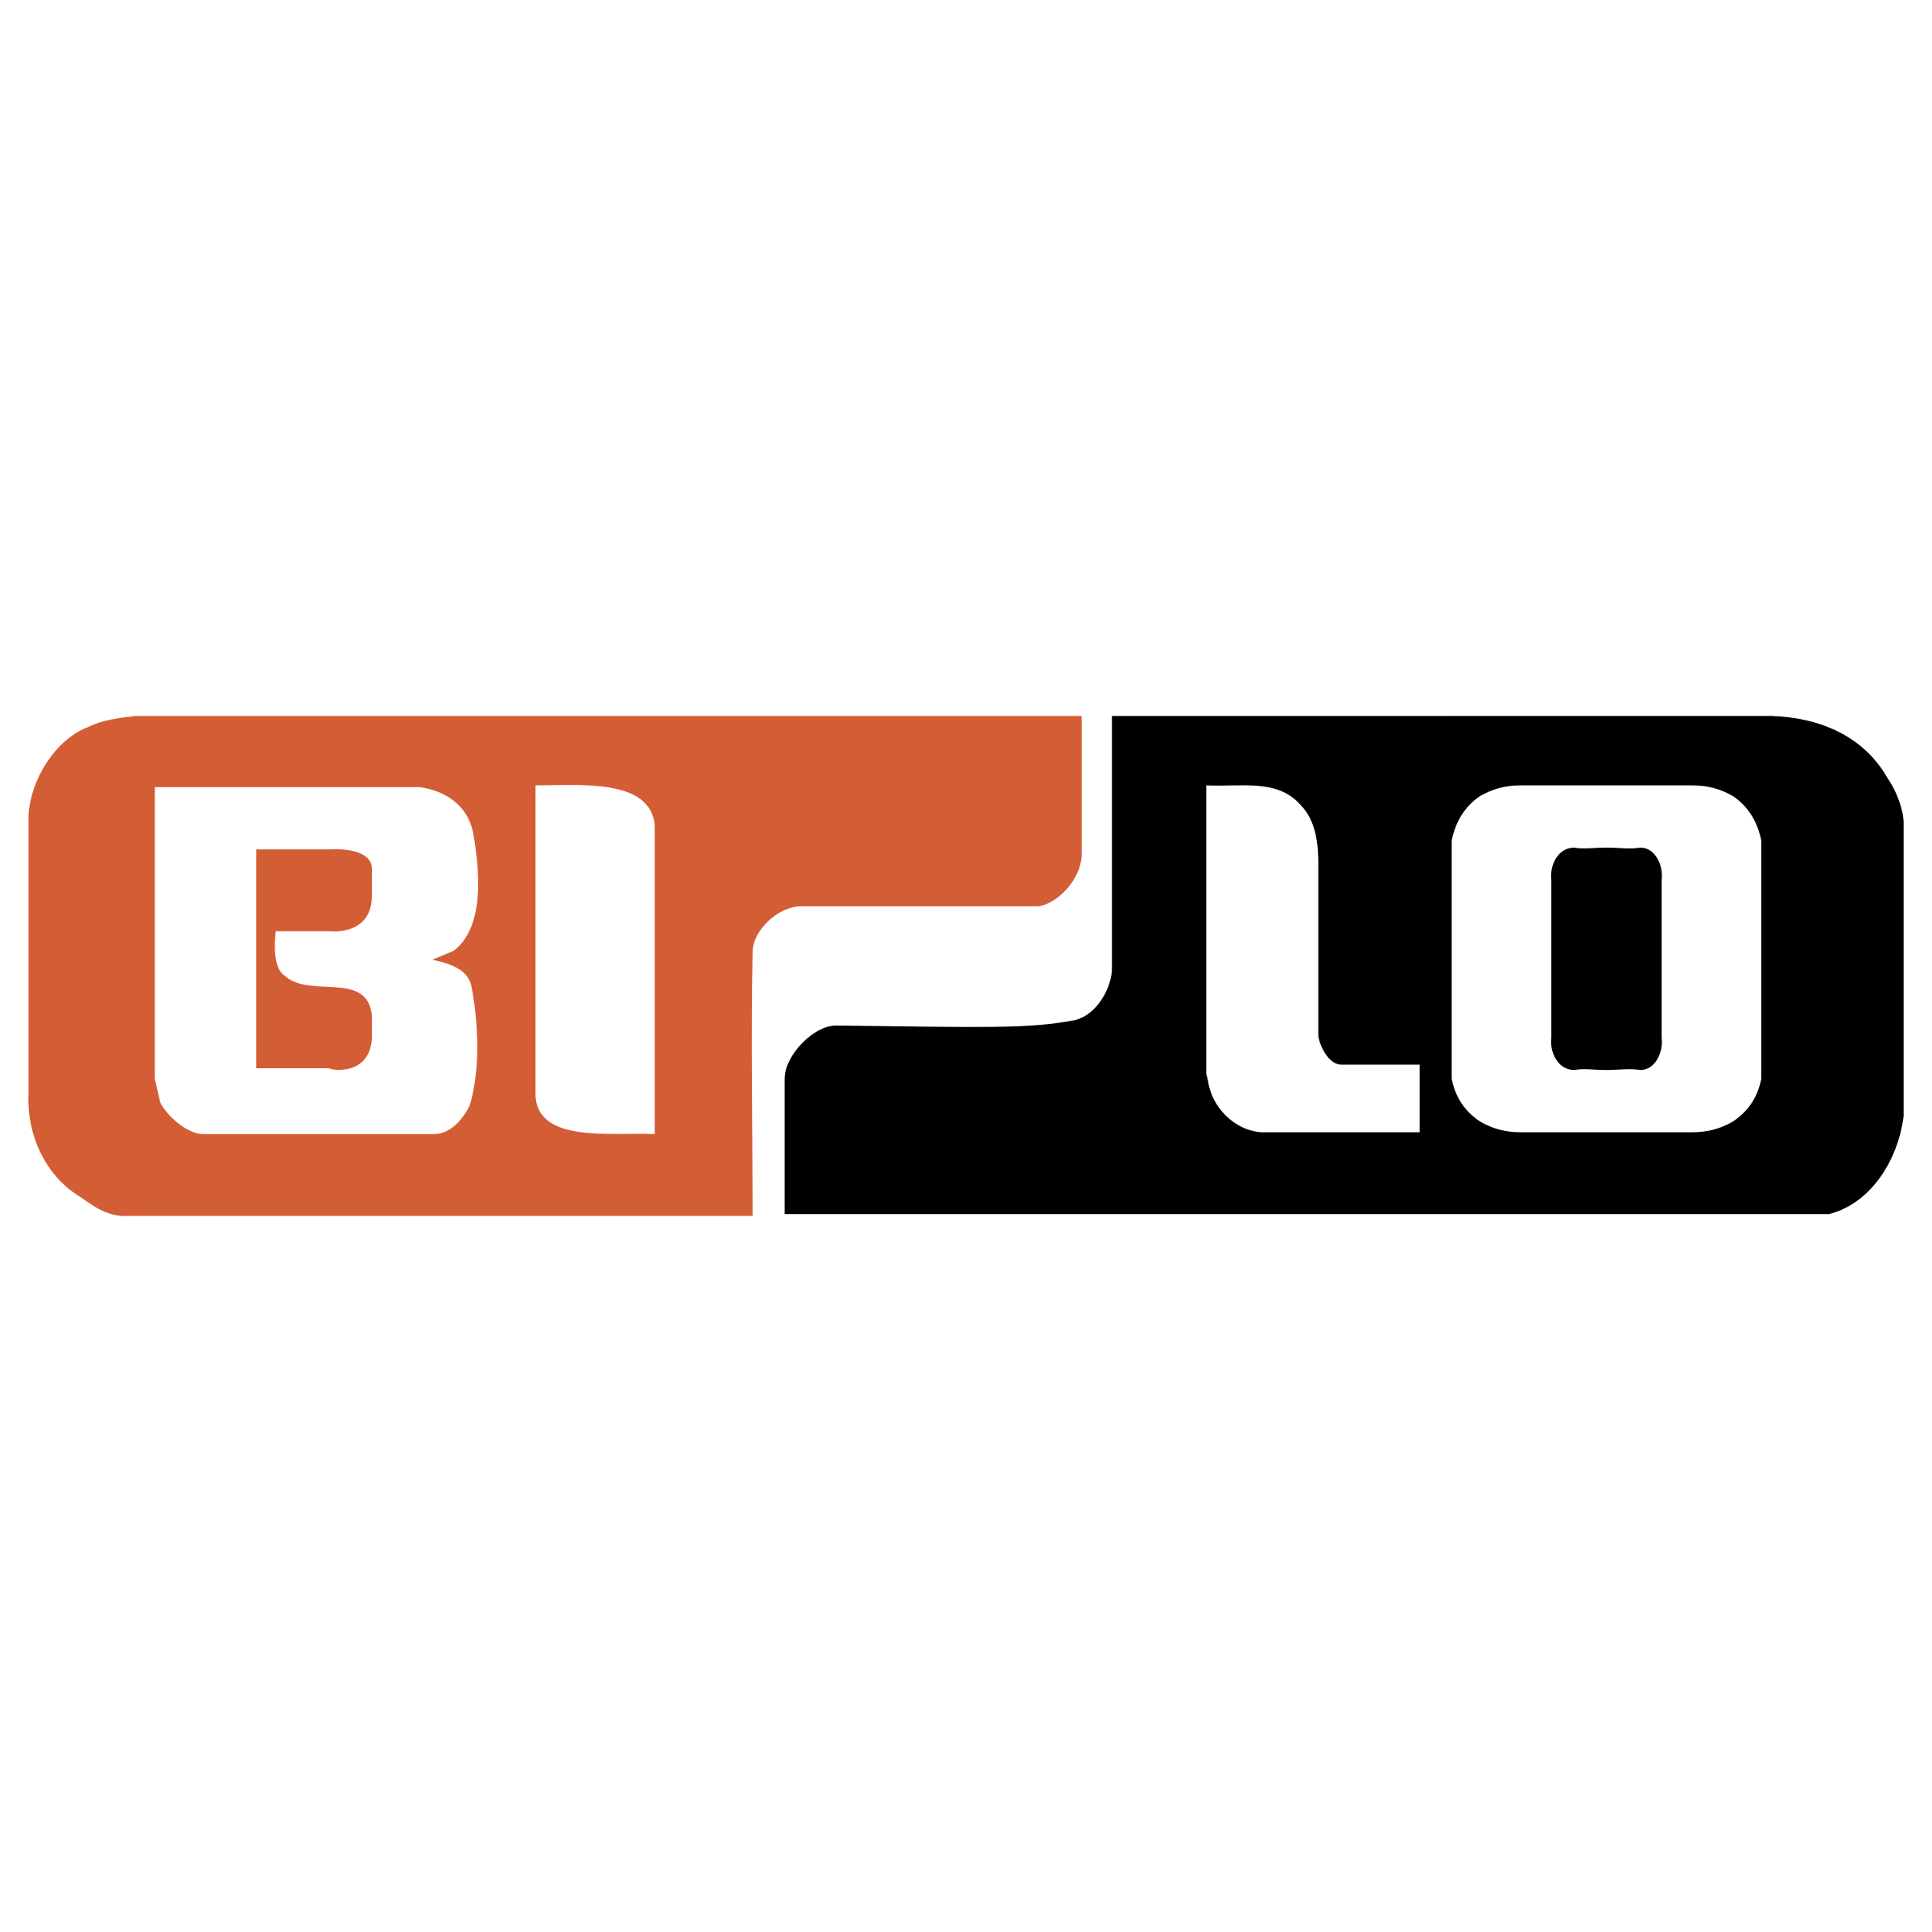 Bilo Logo - BI LO Logo PNG Transparent & SVG Vector - Freebie Supply